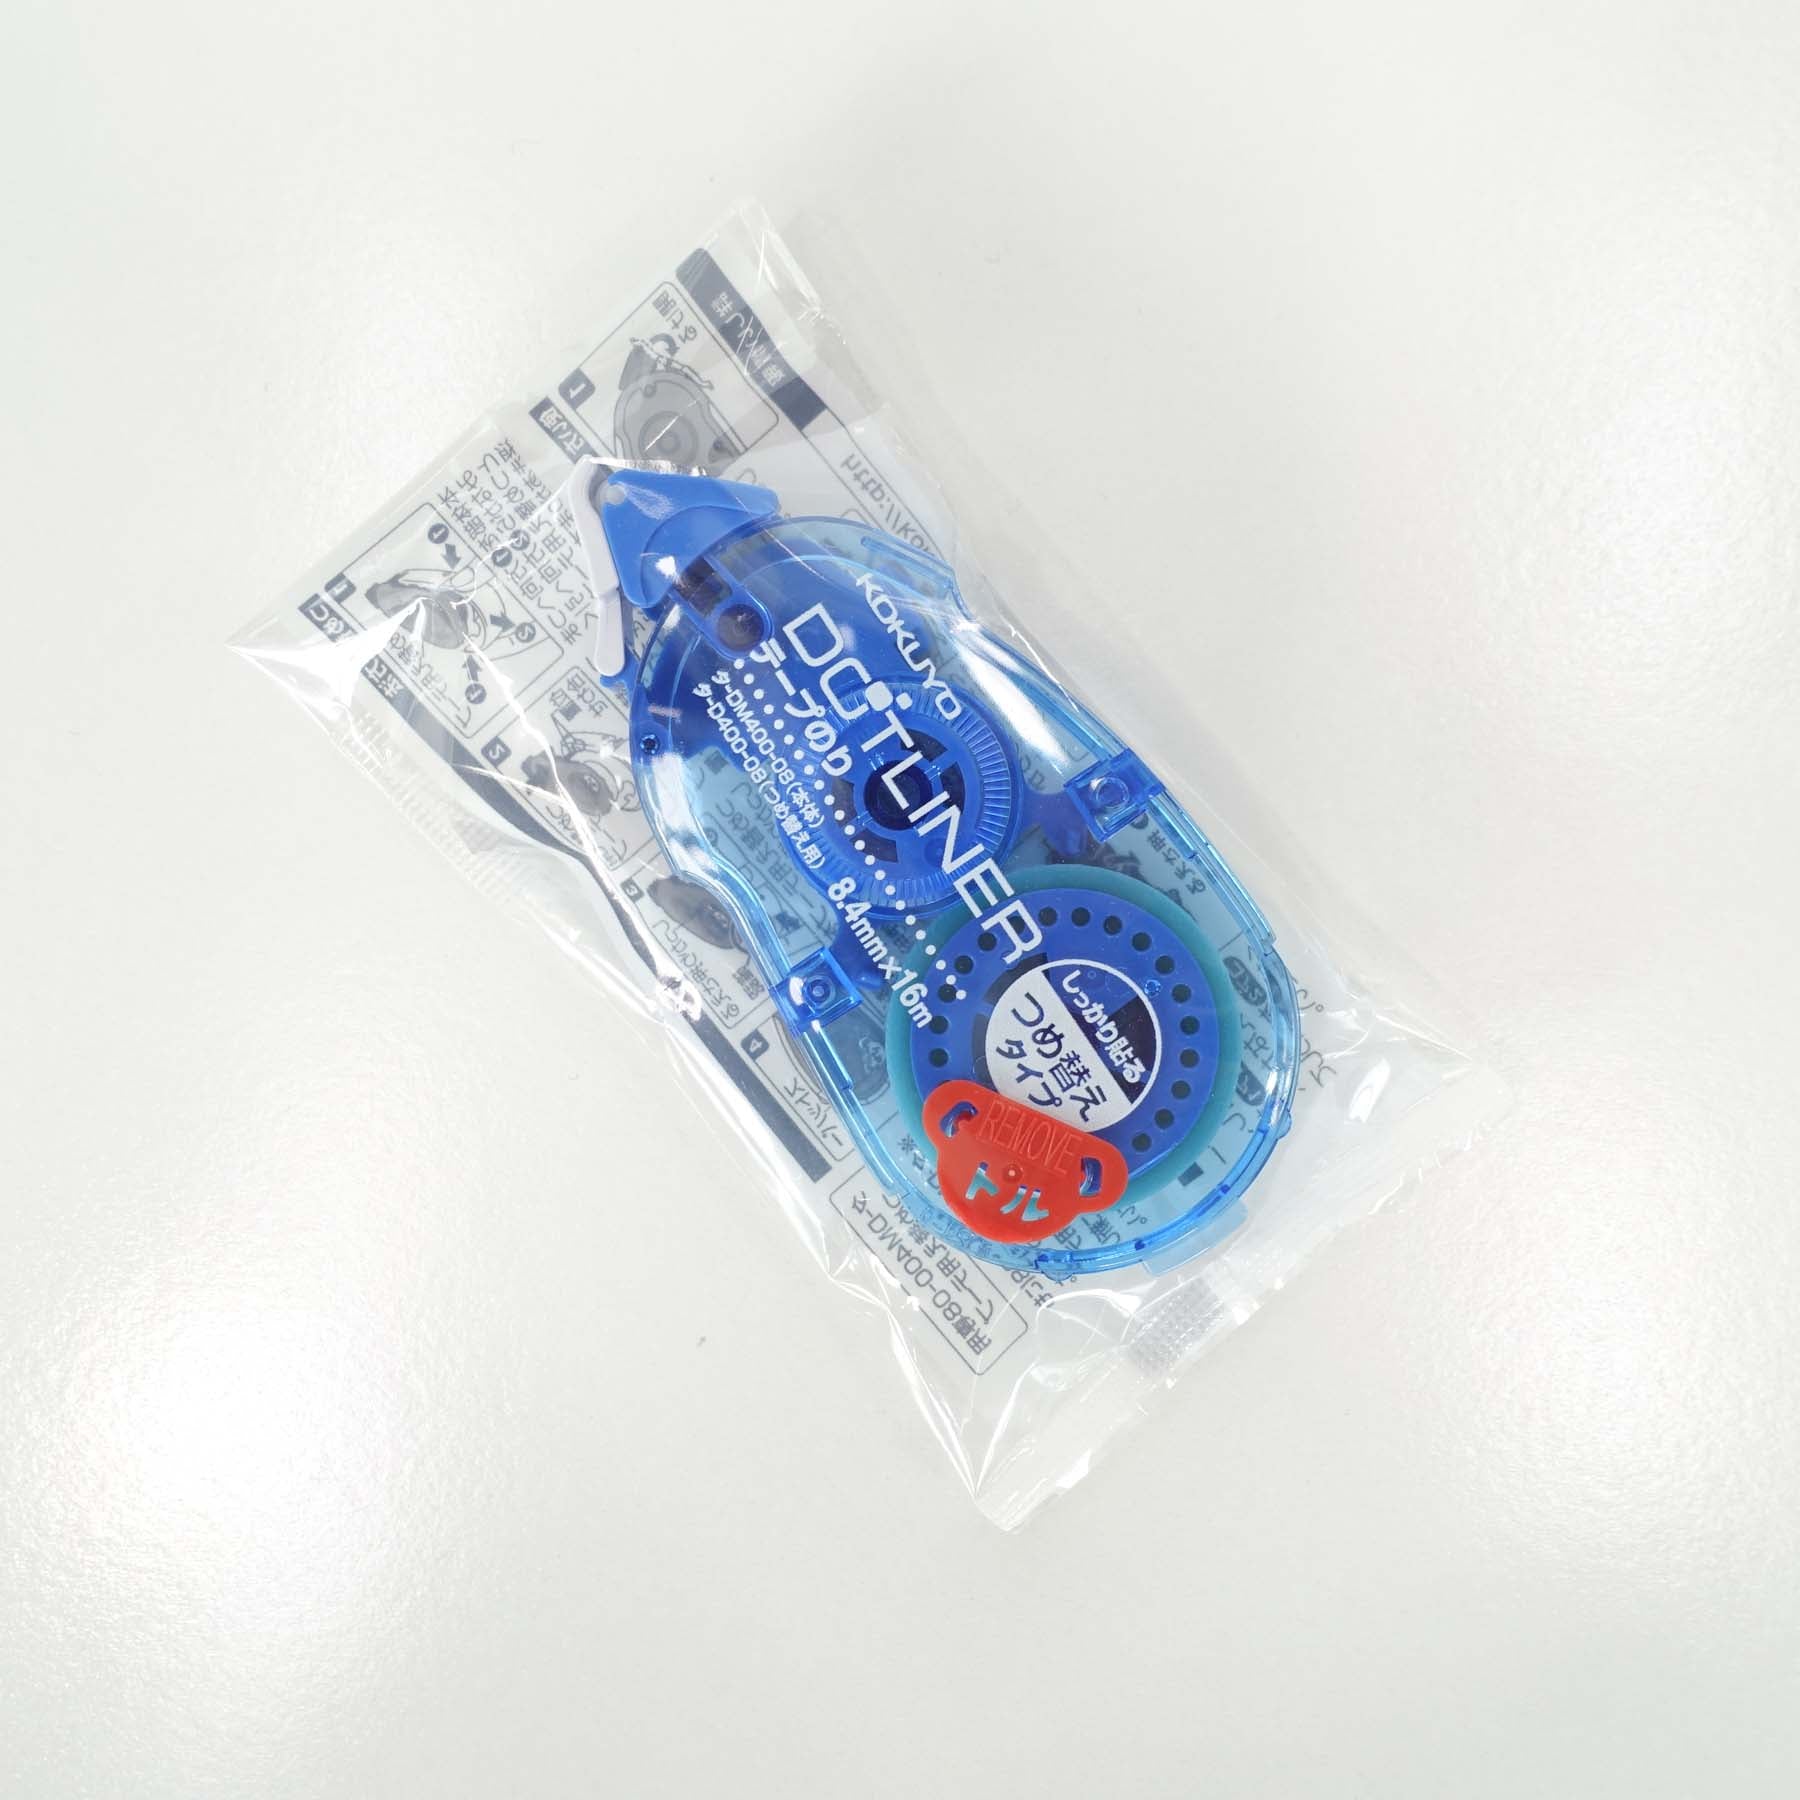 kokuyo dotliner adhesive glue tape  refill